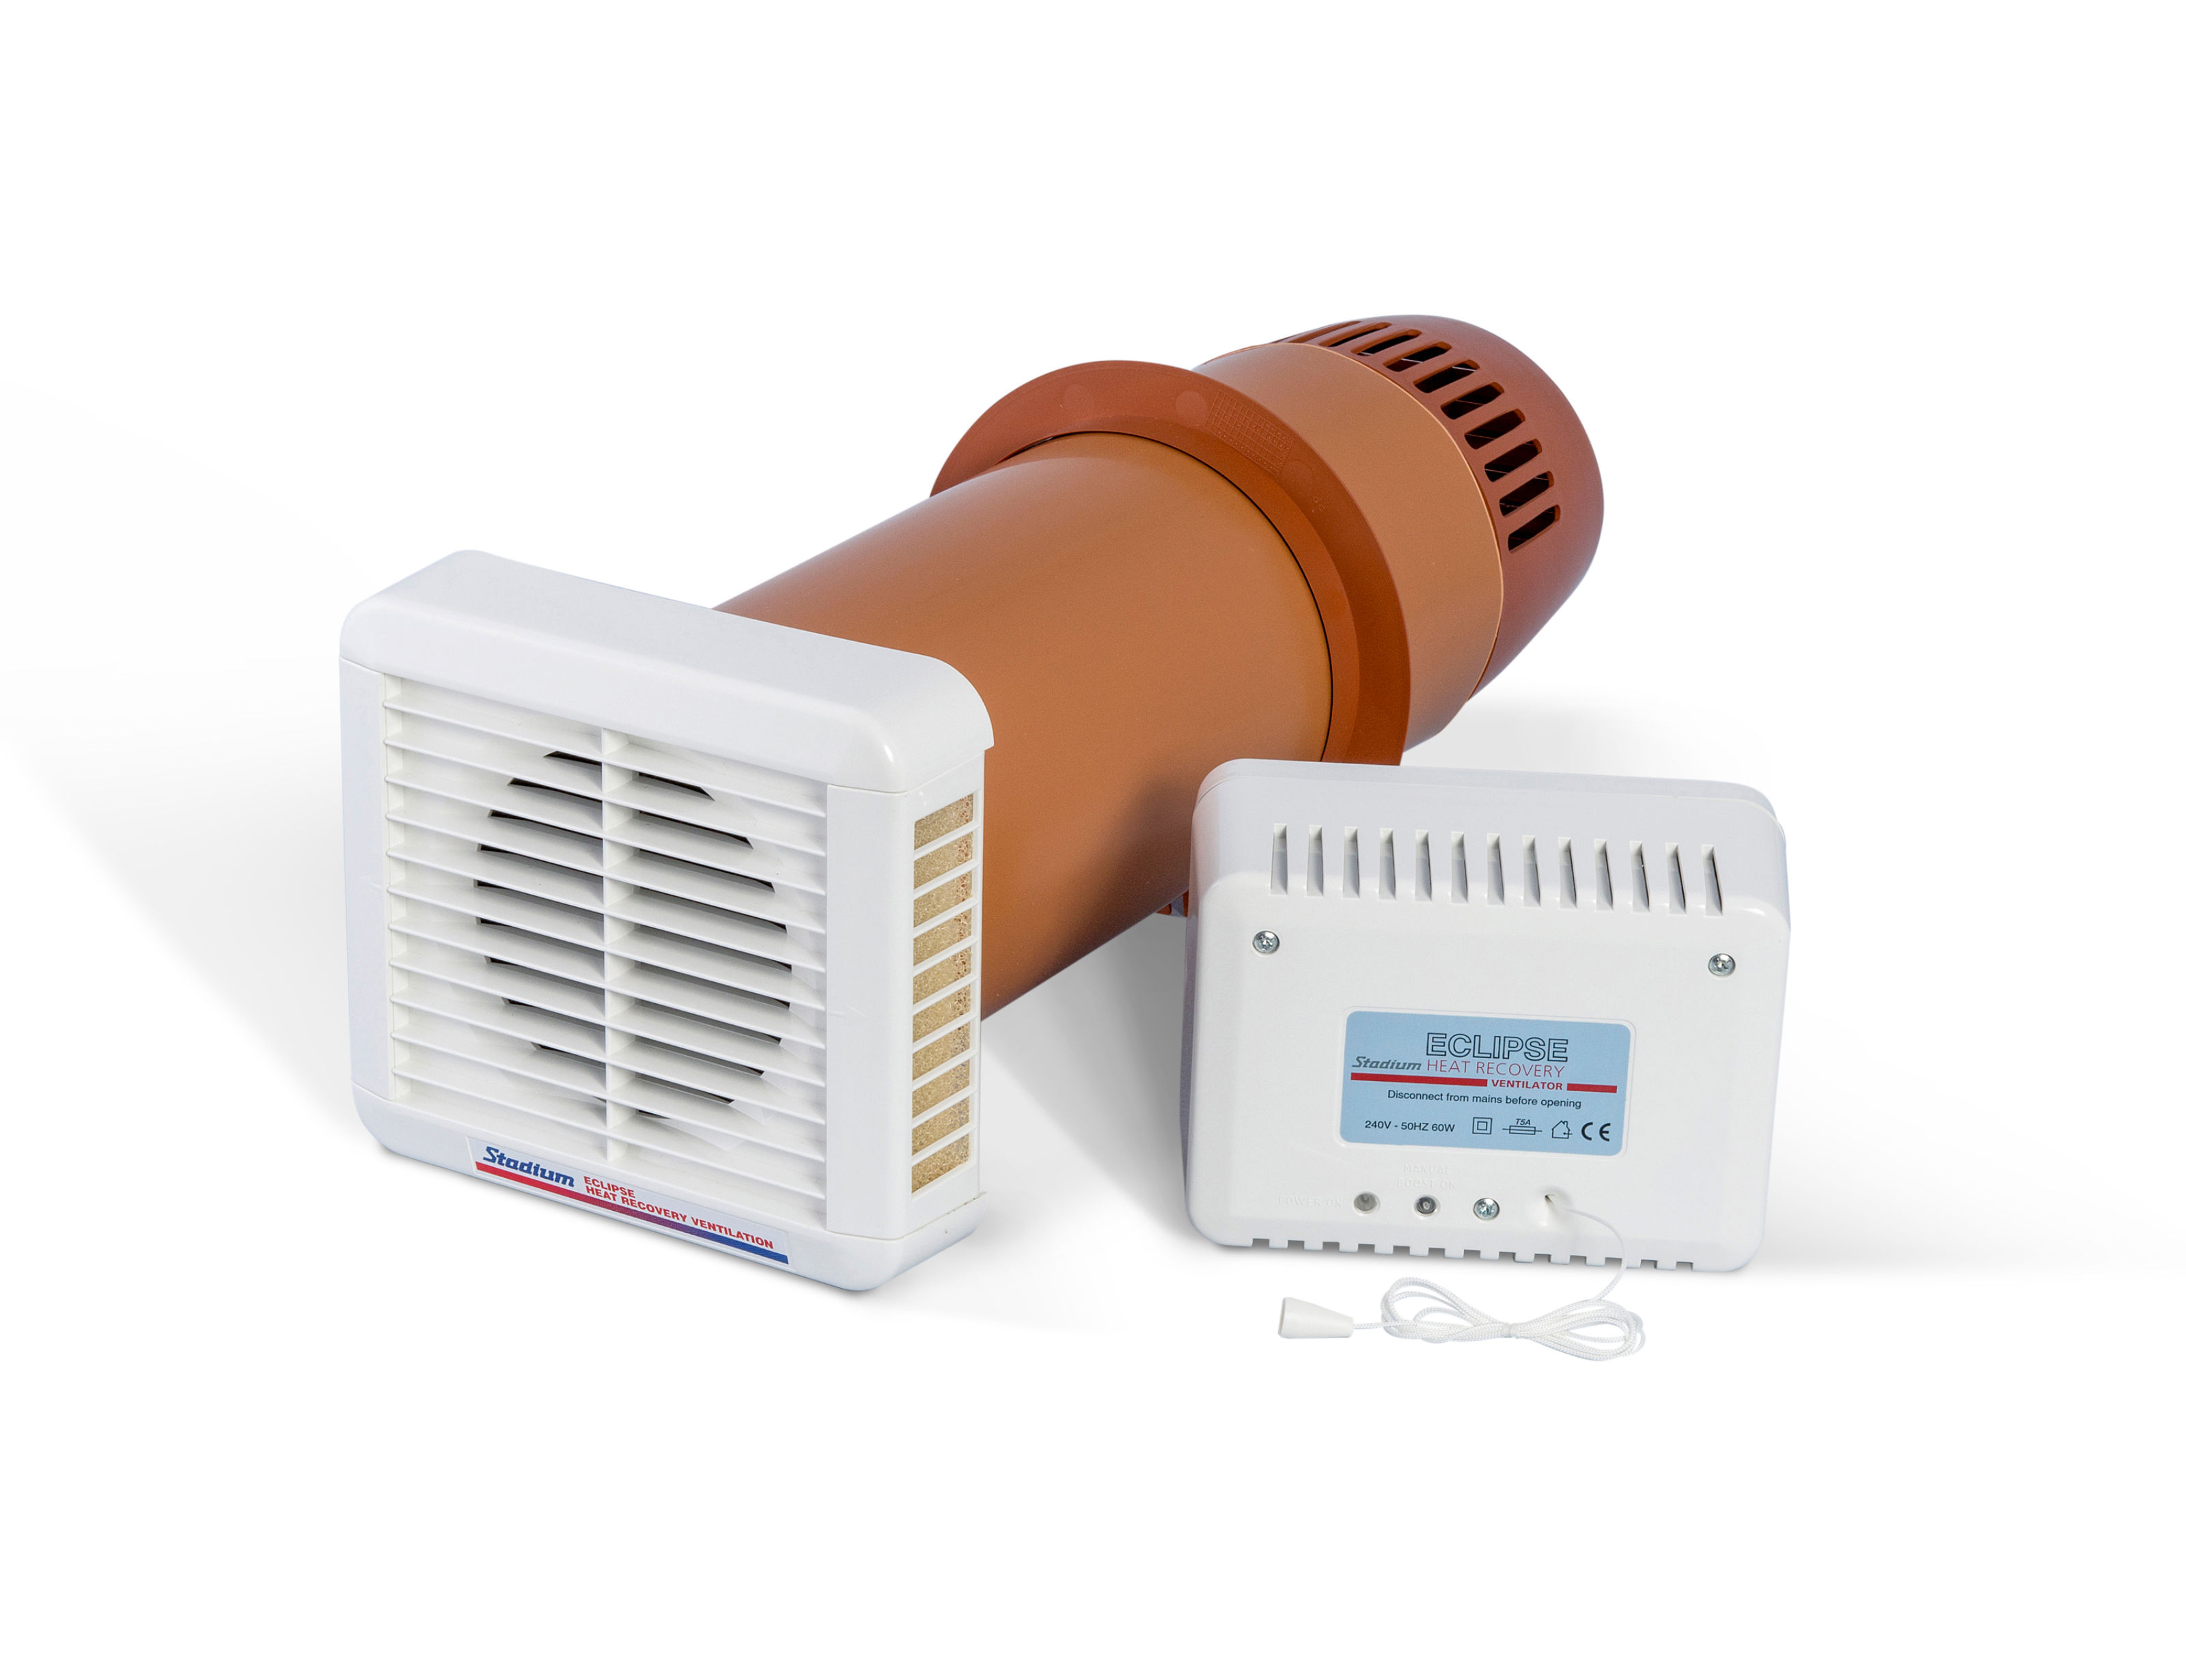 Panasonic heat recovery ventilation fans